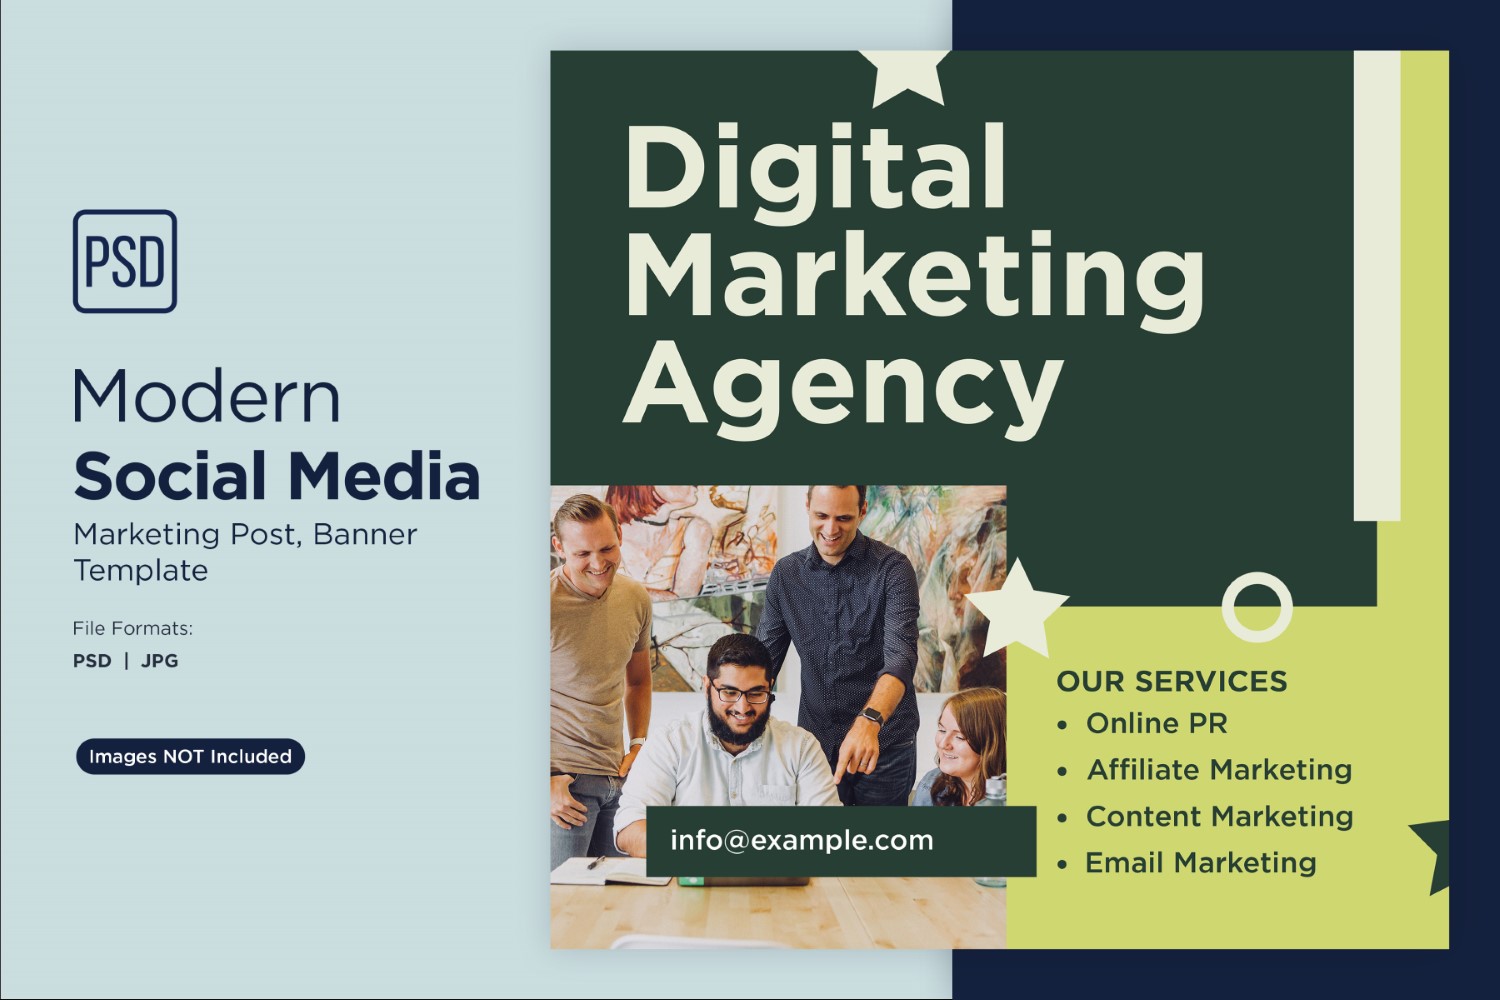 Digital Marketing Agency Business Banner Design Template 5.